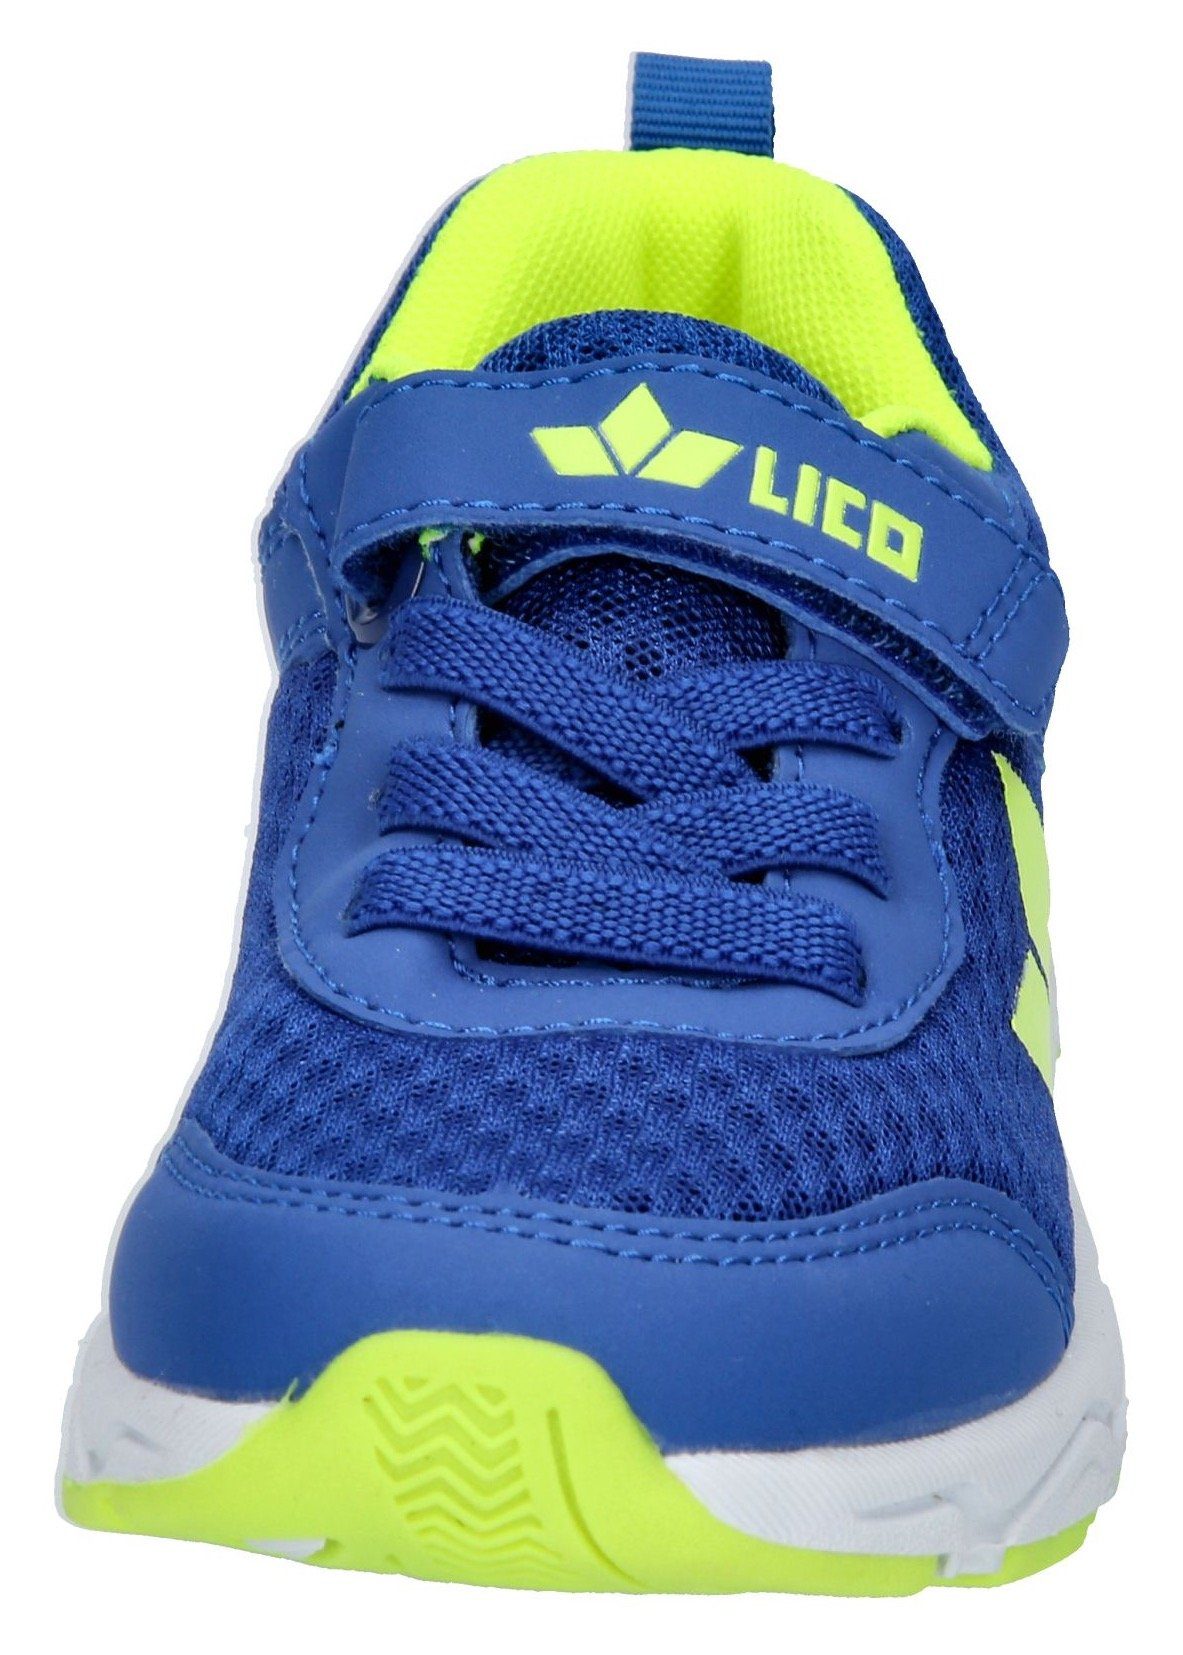 Lico Mika VS WMS Sneaker mit Wechselfußbett blau/lemon